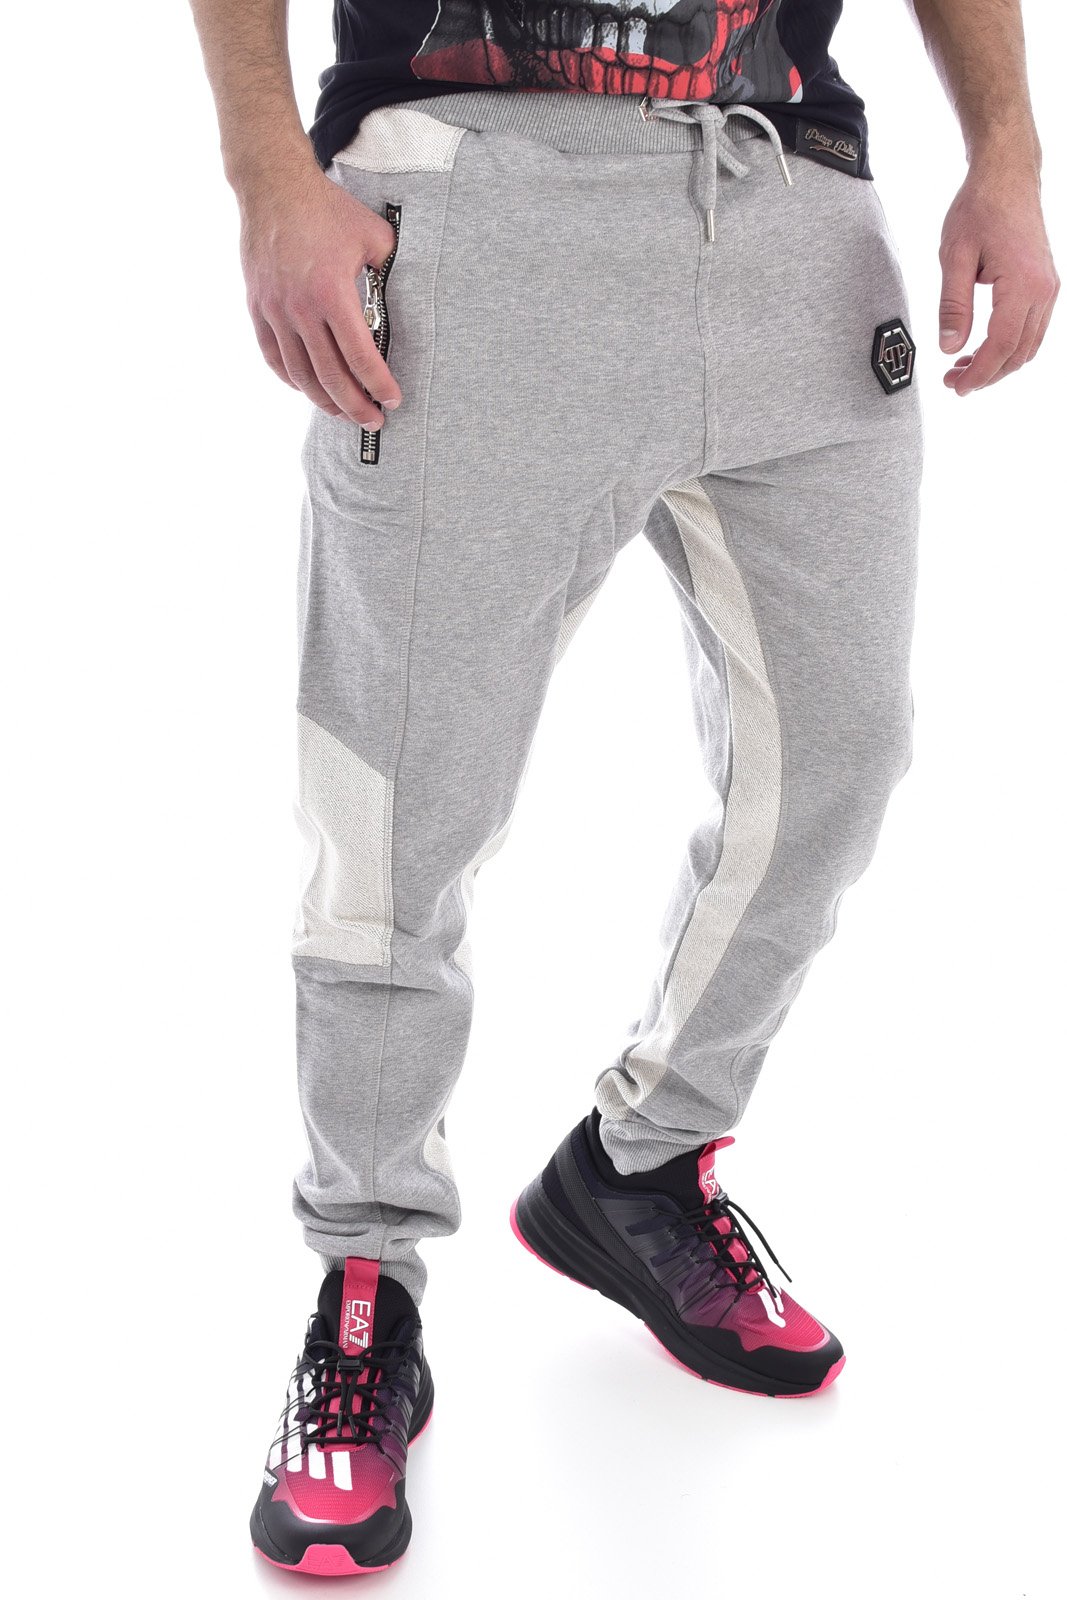 Pantalons sport/streetwear  Philipp plein MJT0050 1046 GREY MELANGED